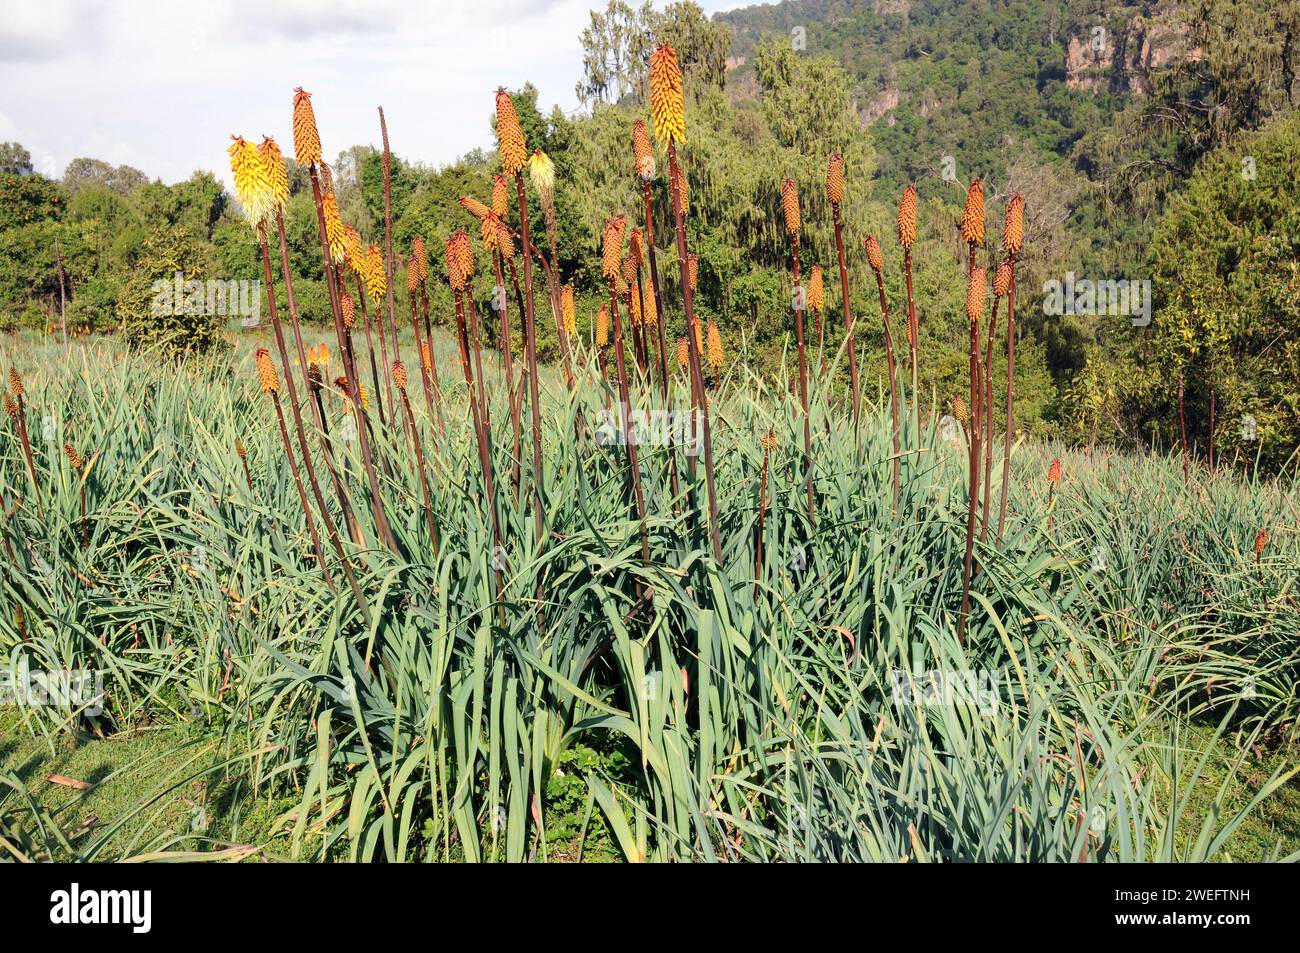 Red hot poker (Kniphofia foliosa) is a perennial herb endemic to Ethiopia. This photo was taken in Bale National Park, Ethiopia. Stock Photo